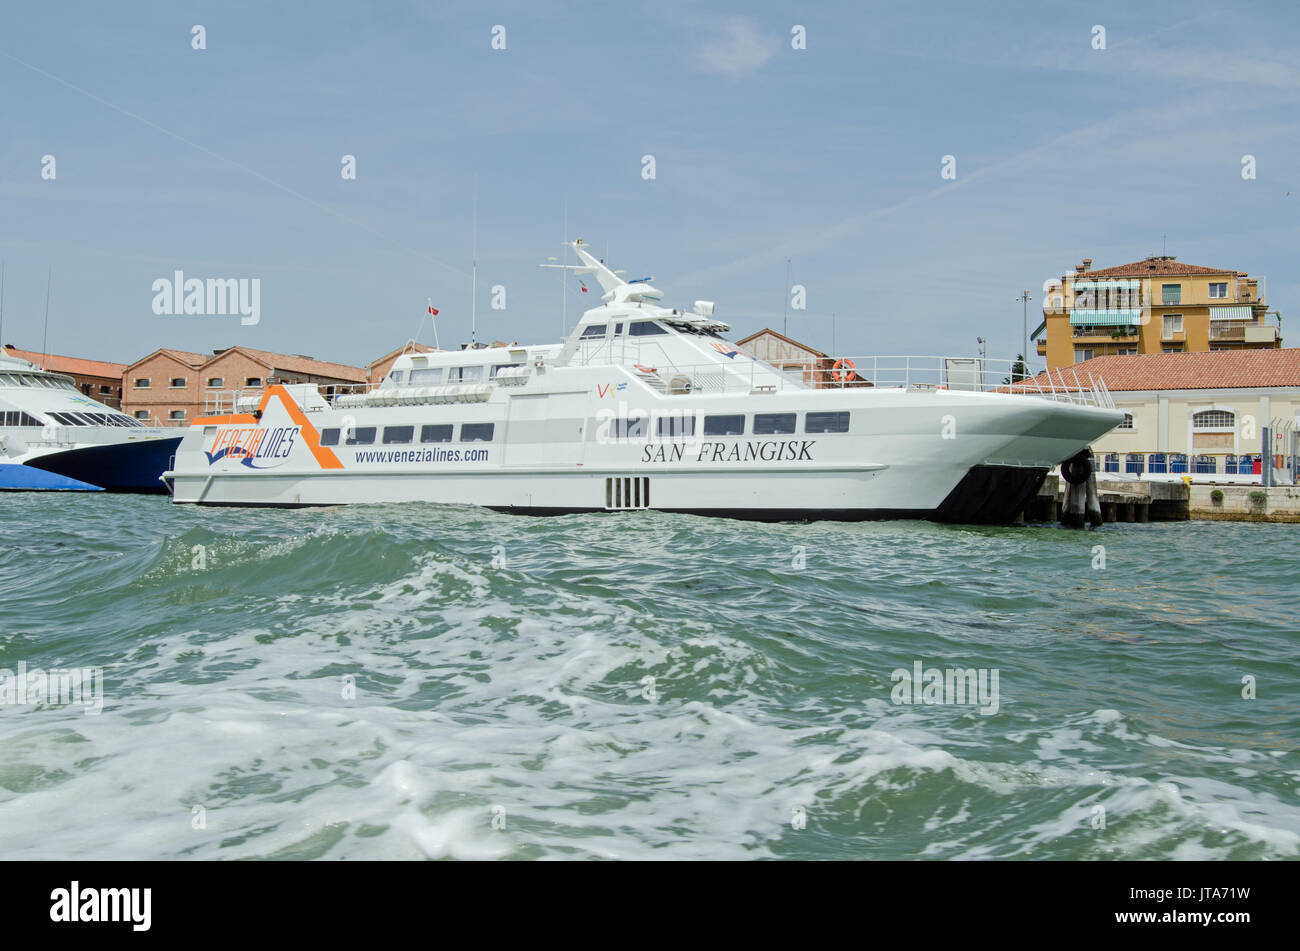 VENICE, ITALY - JUNE 10, 2017: The catamaran ferry San Frangisk, part of the Venezia Lines fleet which transports passengers across the Adriatic. Stock Photo